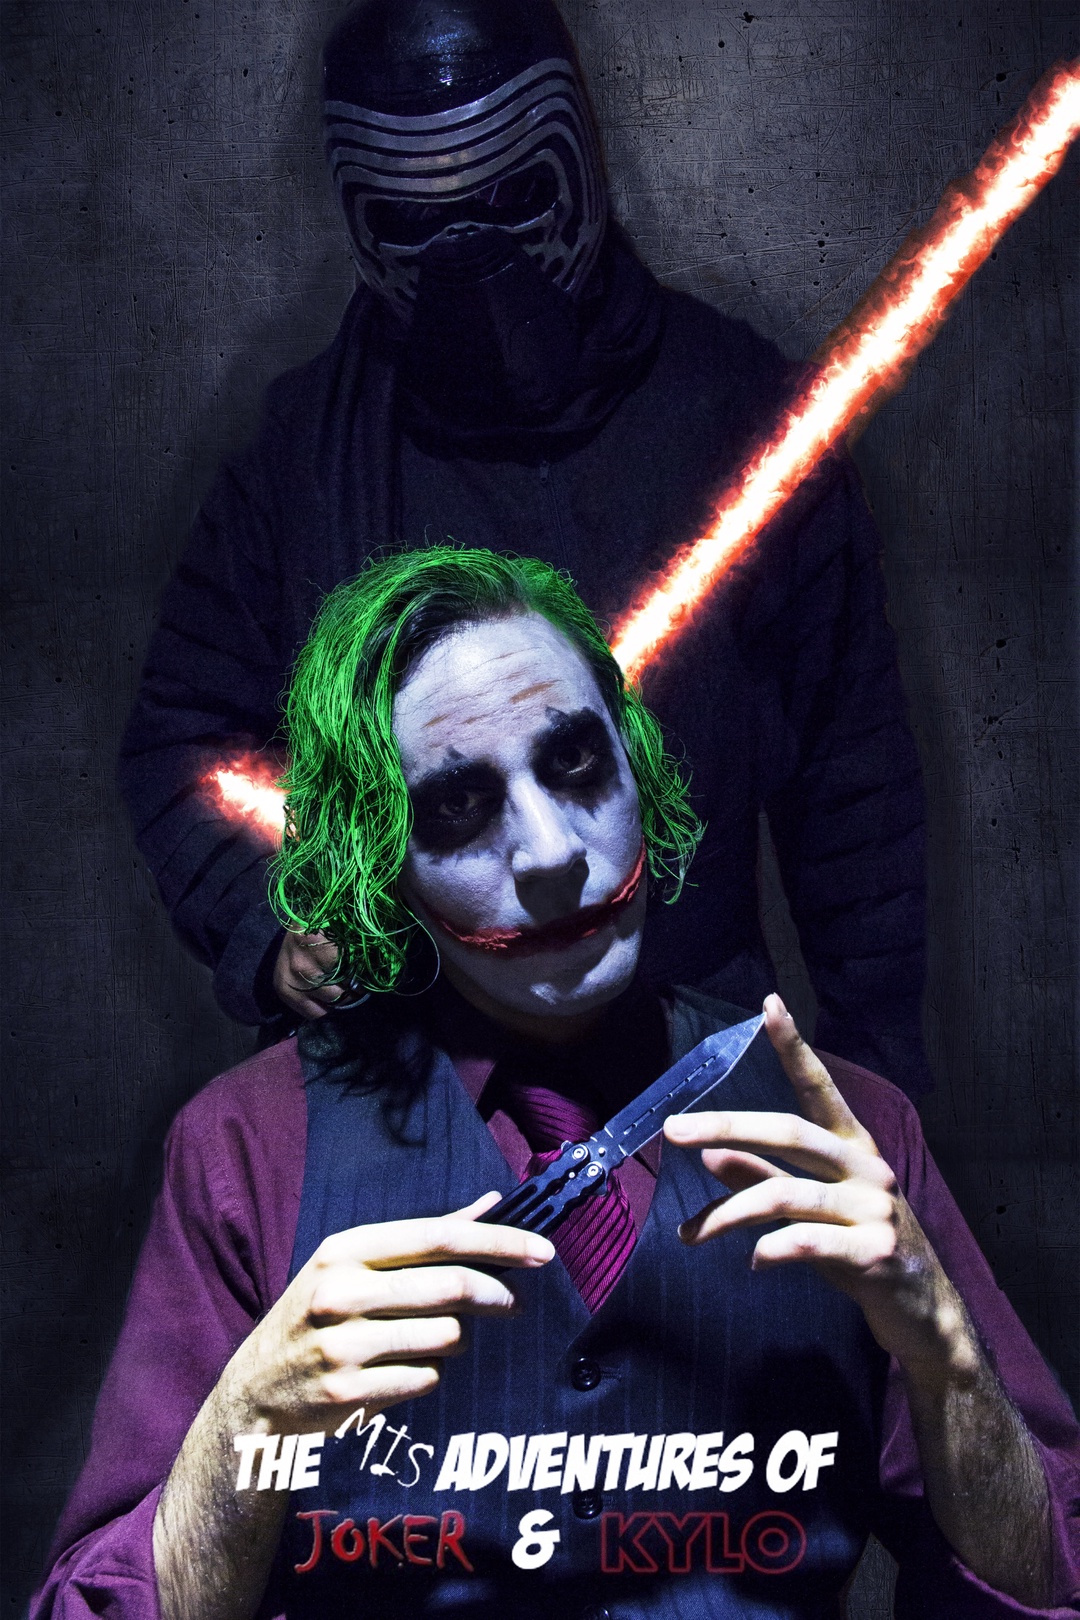 The Misadventures of Joker & Kylo